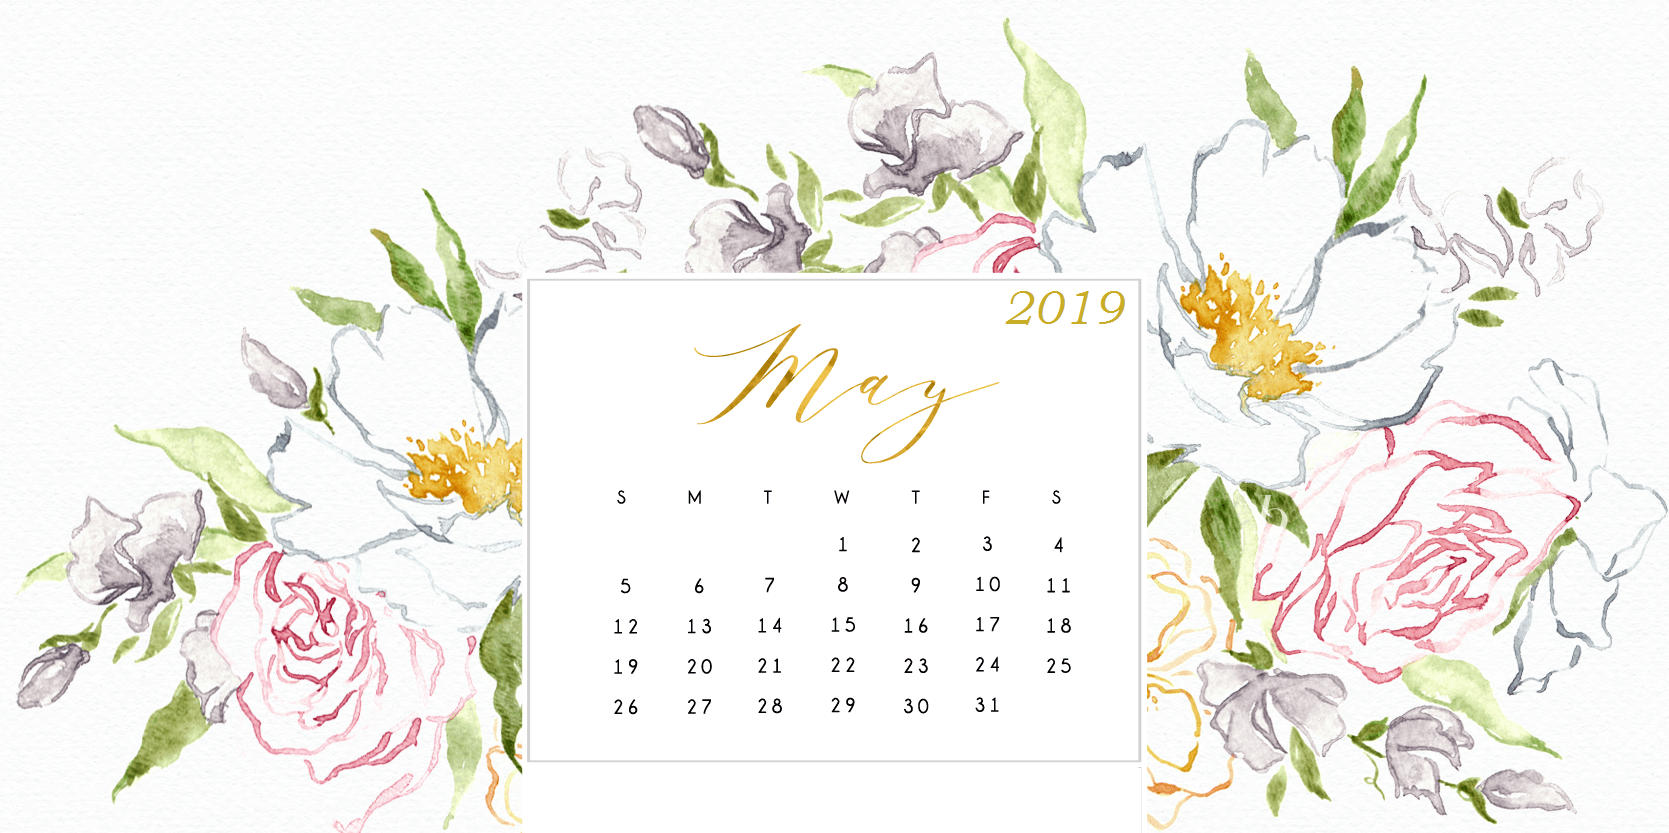 May 2019 Calendar Wallpapers - Wallpaper Cave